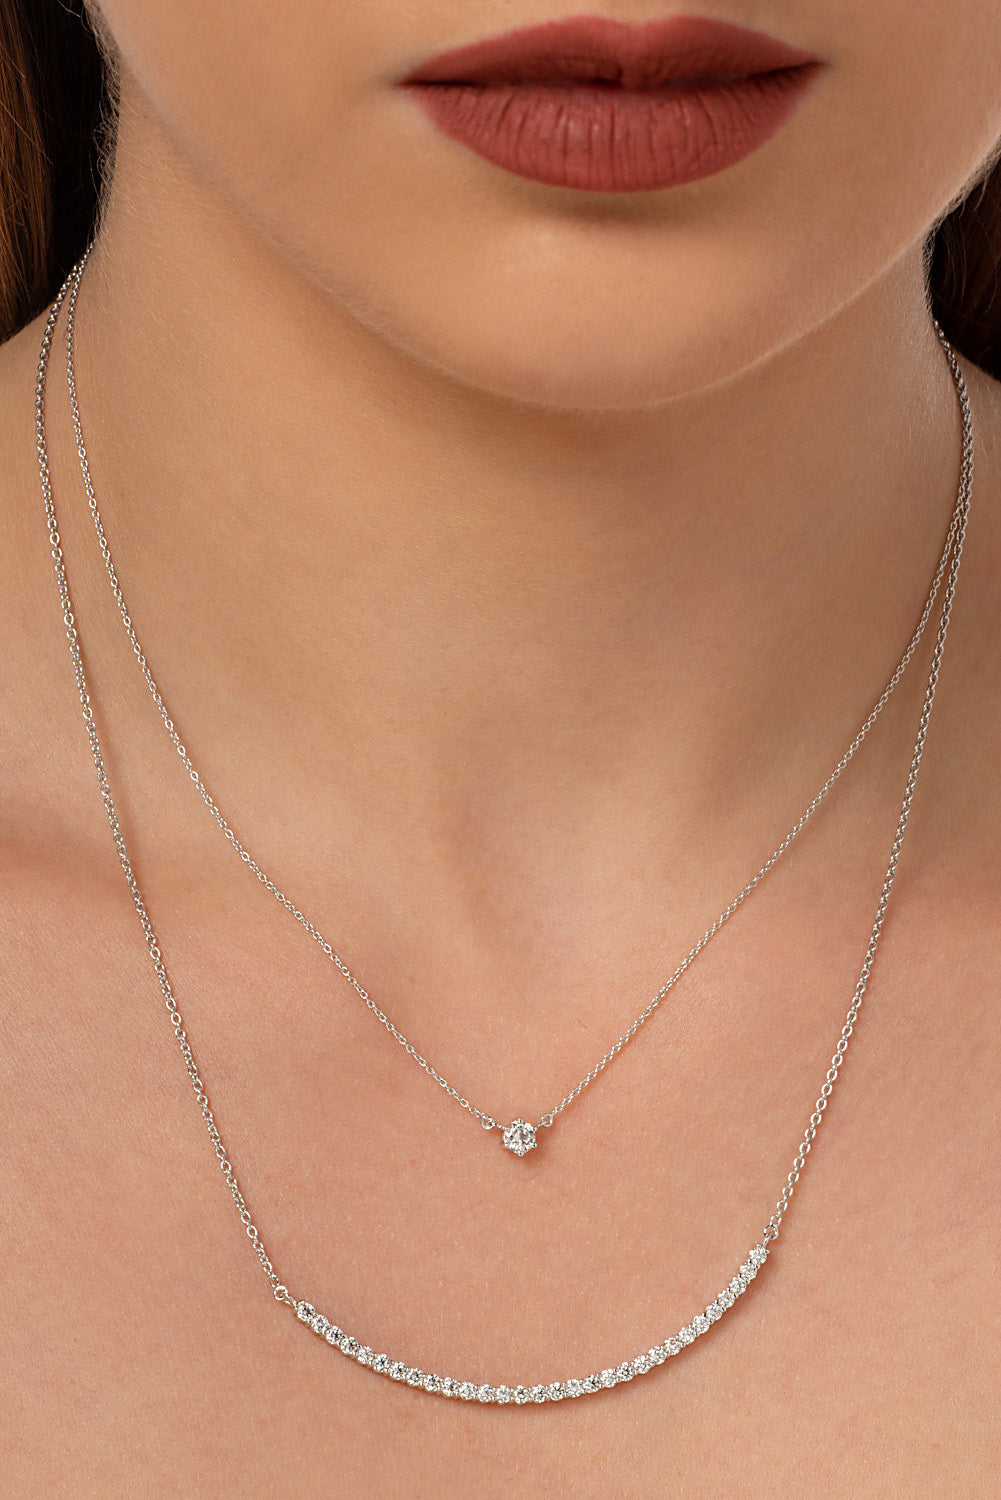 Solitaire diamond necklace. Diamond bar necklace.